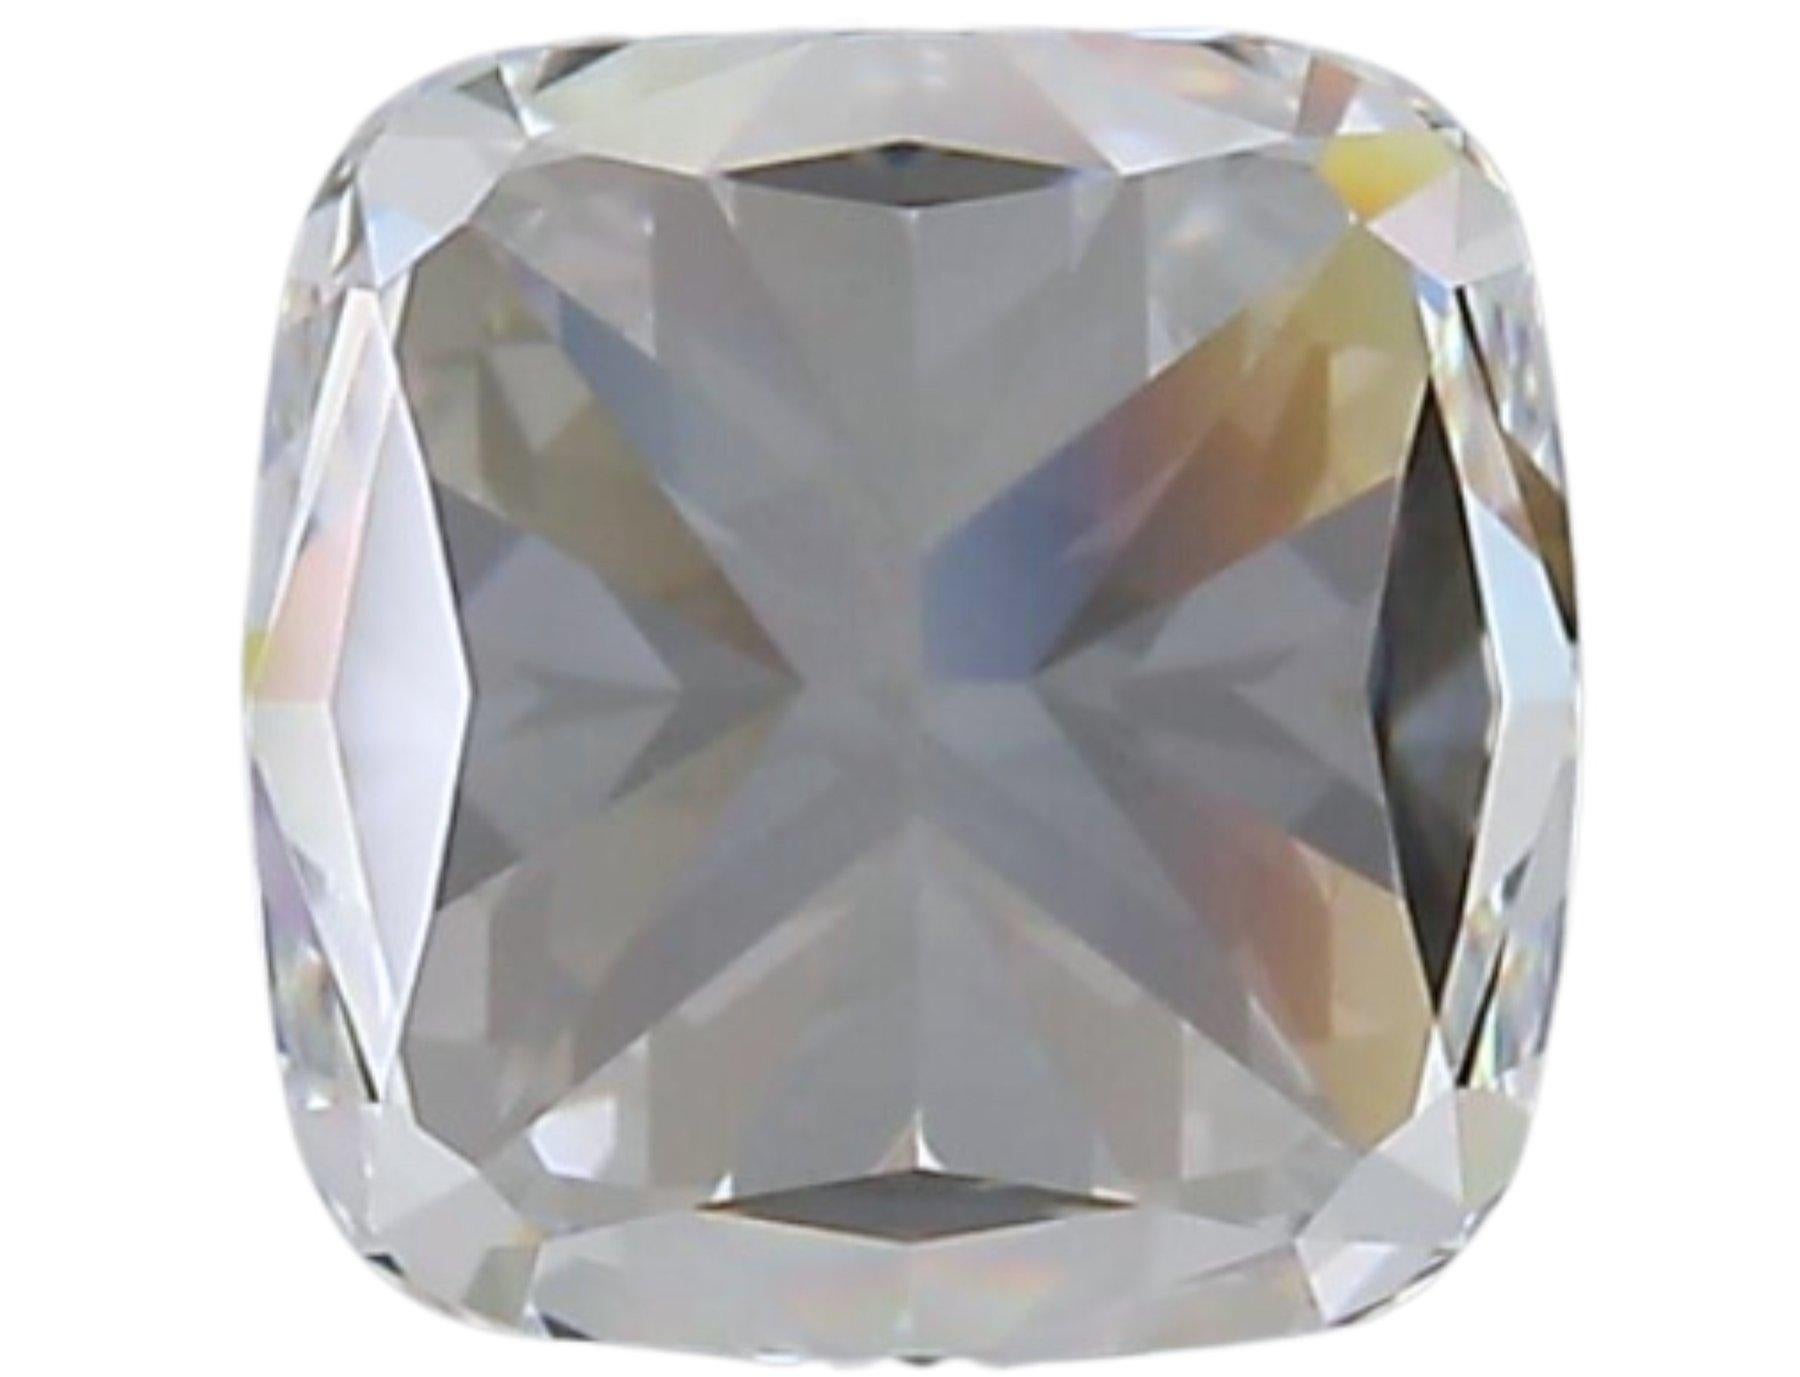 Women's Exquisite Ideal Cut 1pc Natural Diamond w/1.52ct - IGI Certified For Sale